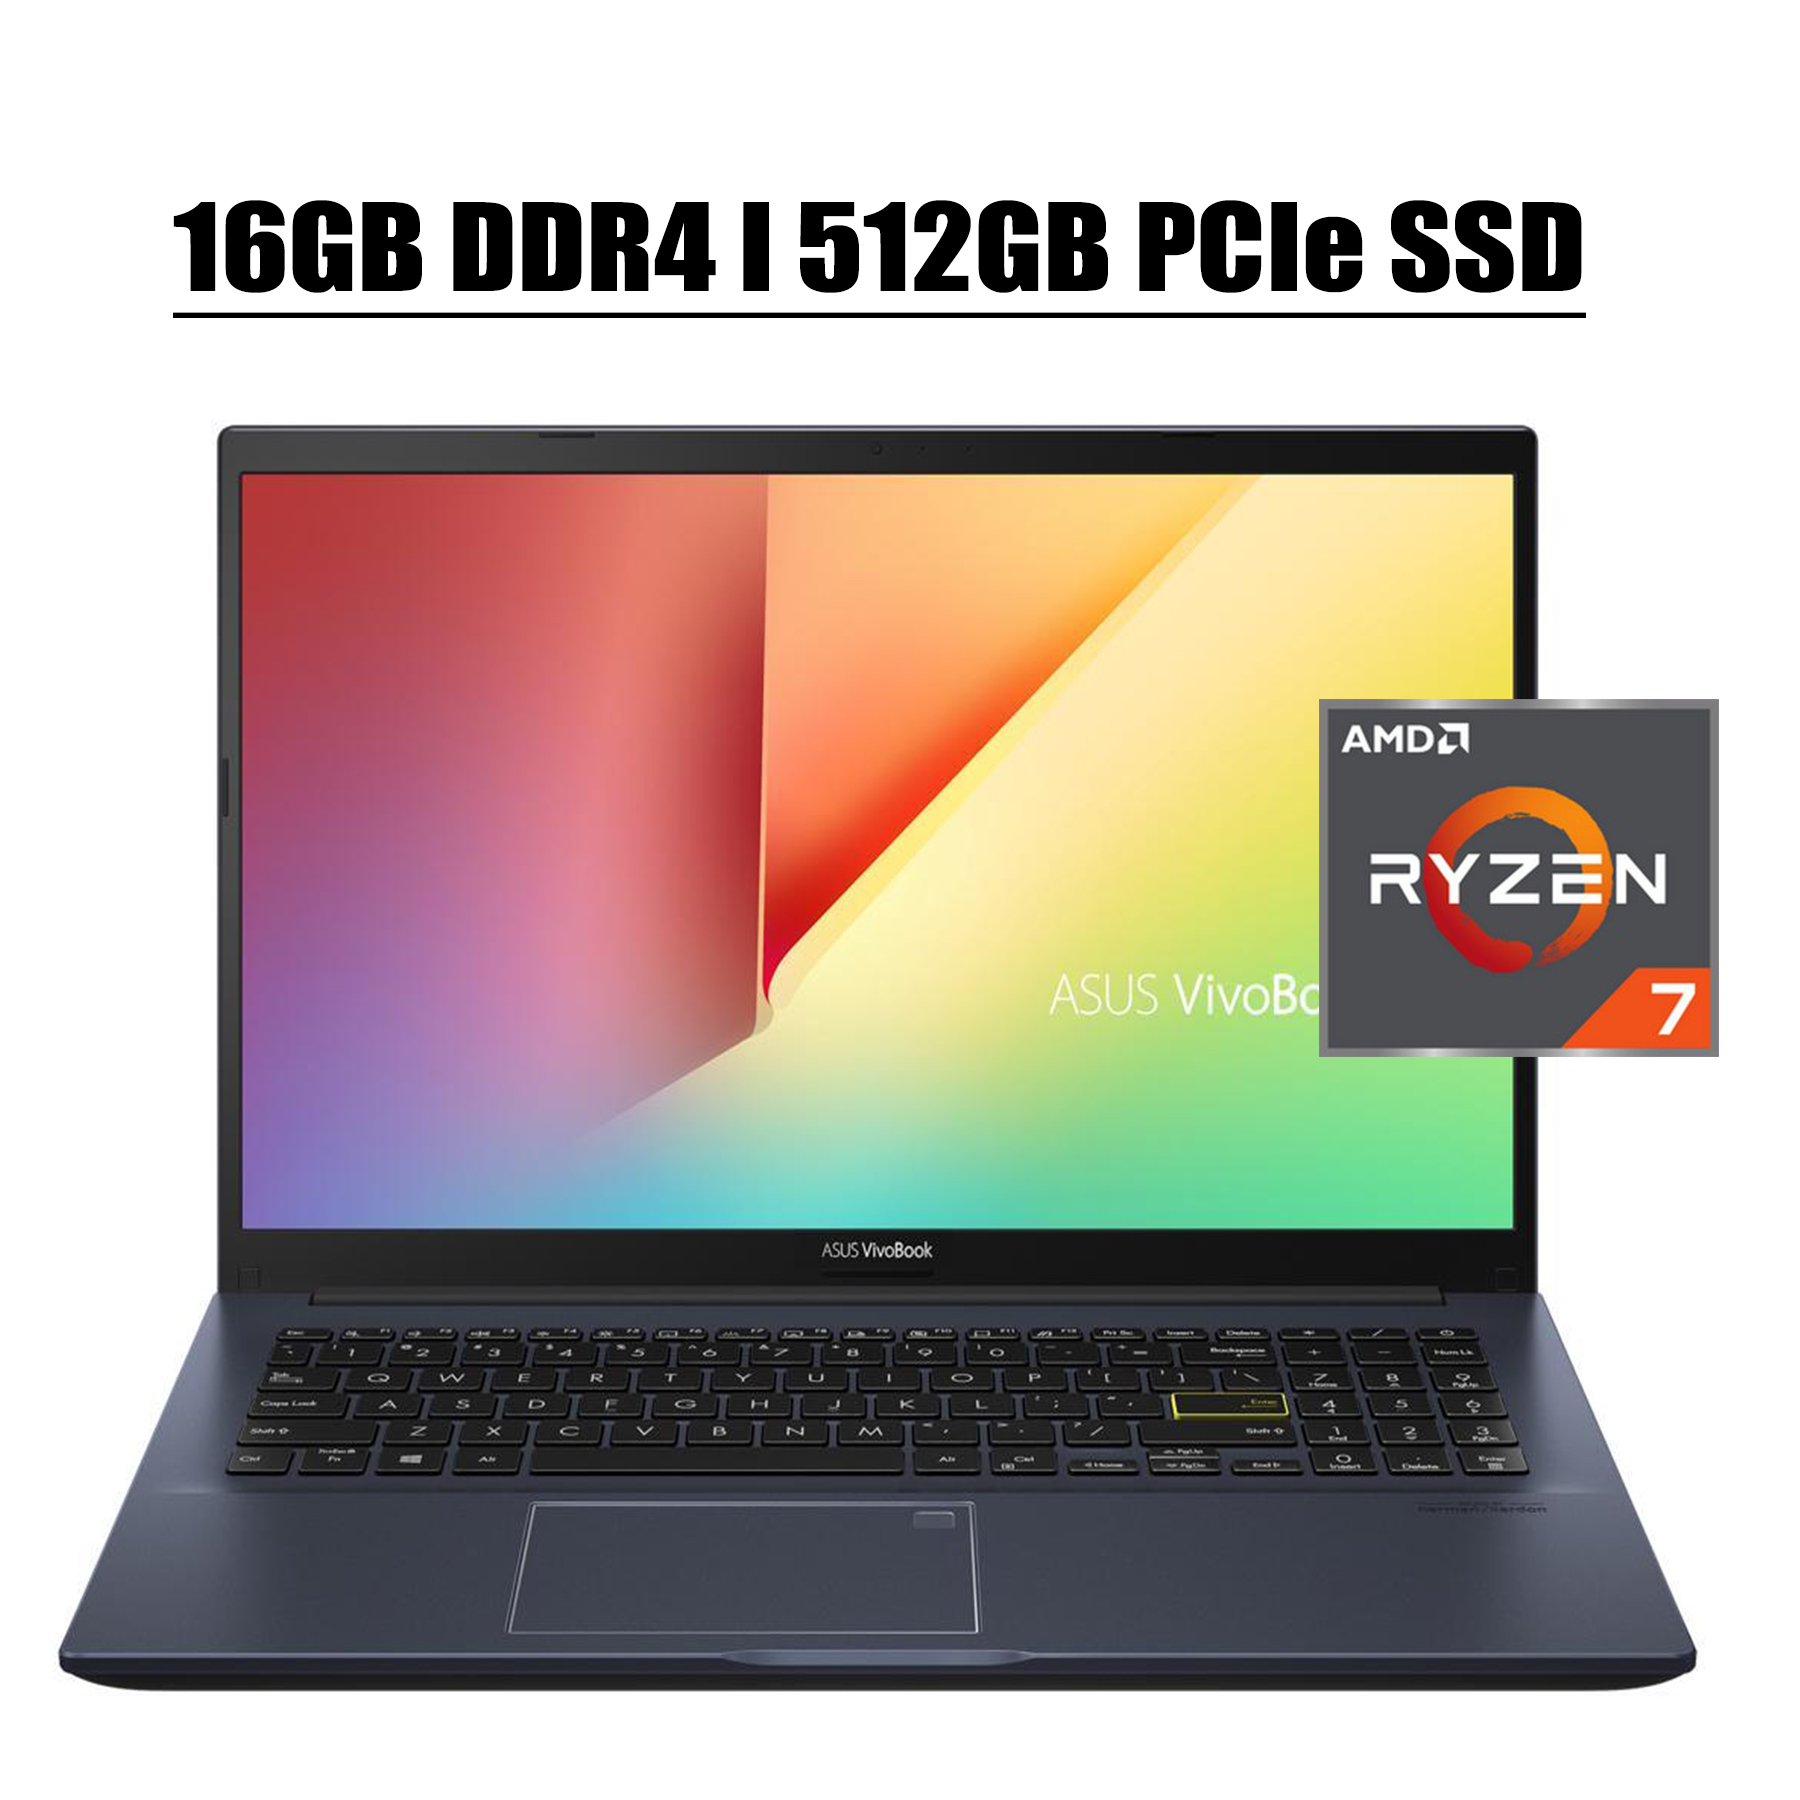 2020 Flagship ASUS VivoBook 15 F513 Thin and Light Premium Laptop Computer I 15.6" FHD I AMD 6-Core Ryzen 7 4700U I 16GB DDR4 512GB PCIe SSD I Fingerprint&nbsp;Backlit Webcam Win 10 - image 1 of 9